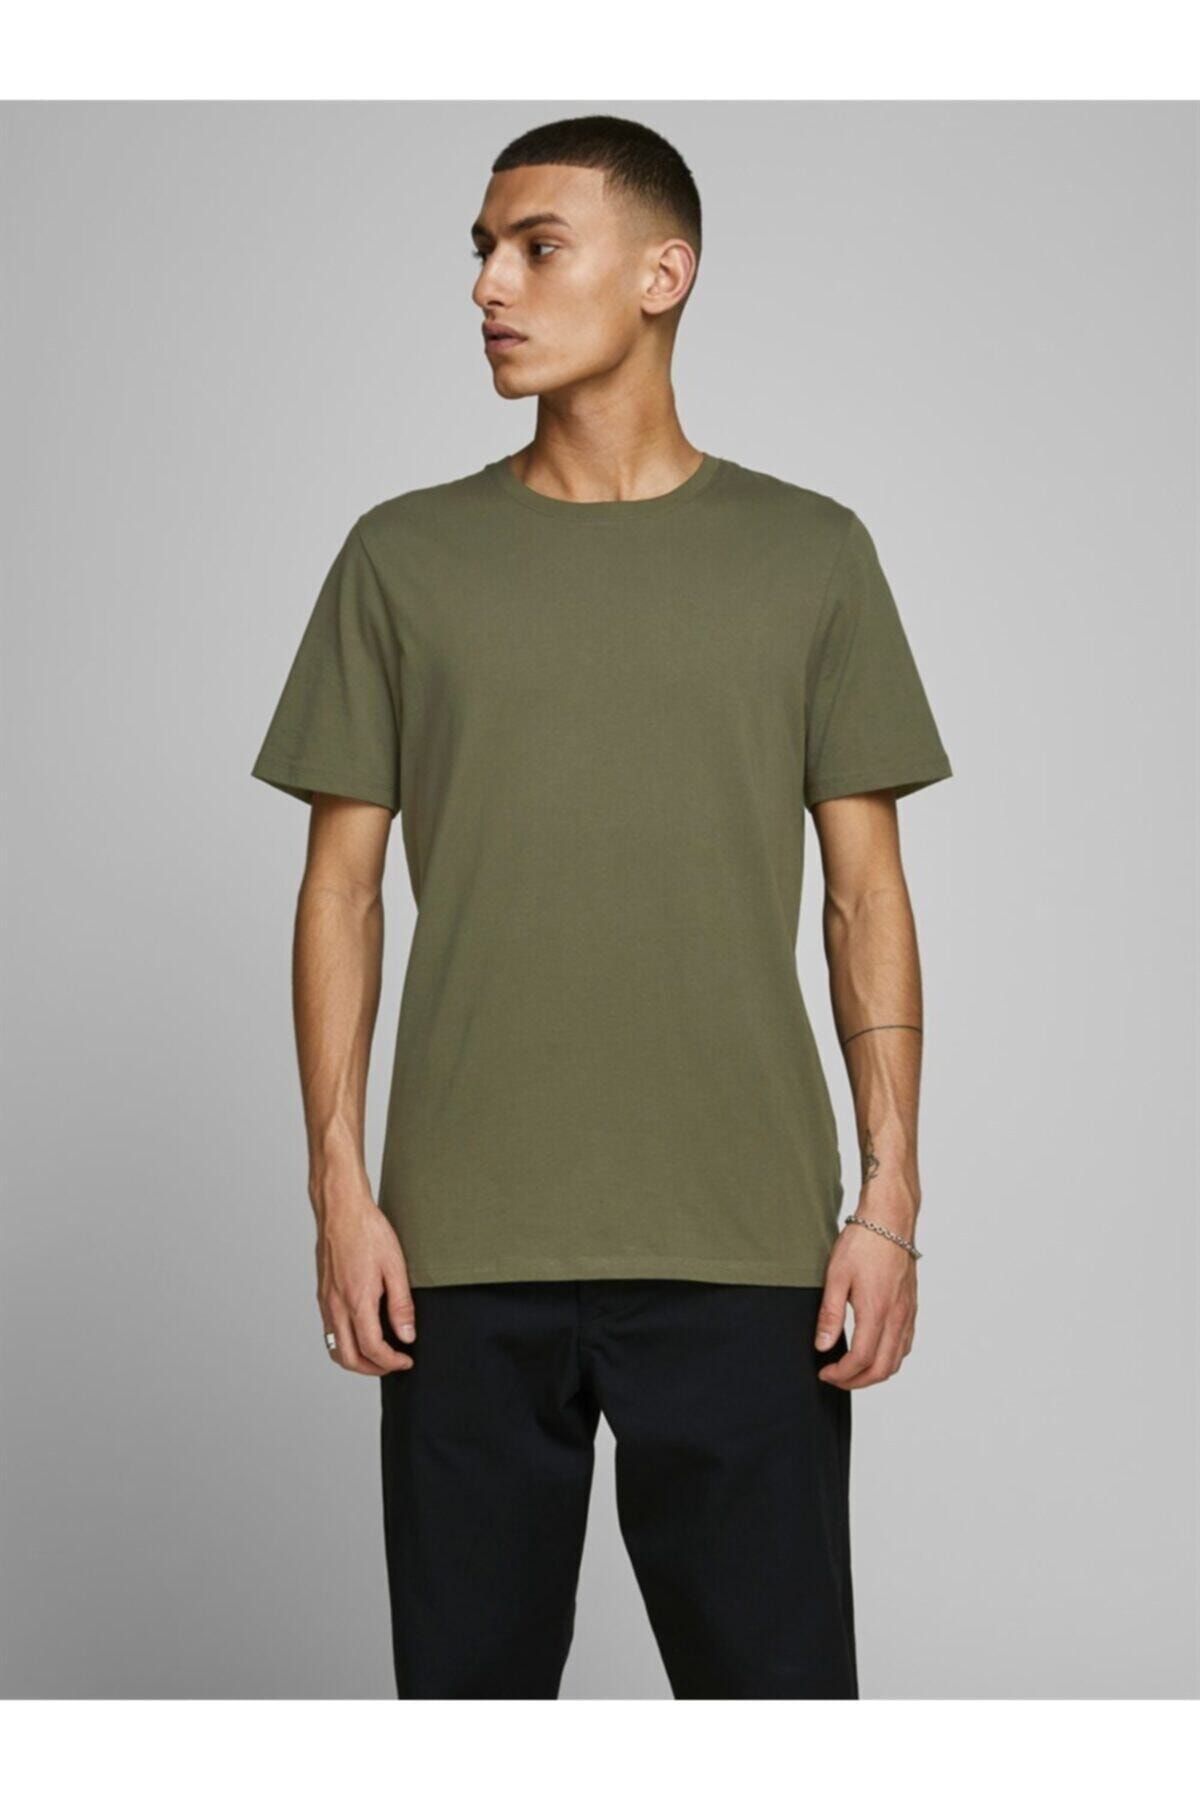 Jack & Jones Jjeorganıc Basıc Tee Ss O Yeşil Erkek Kısa Kol T-shirt